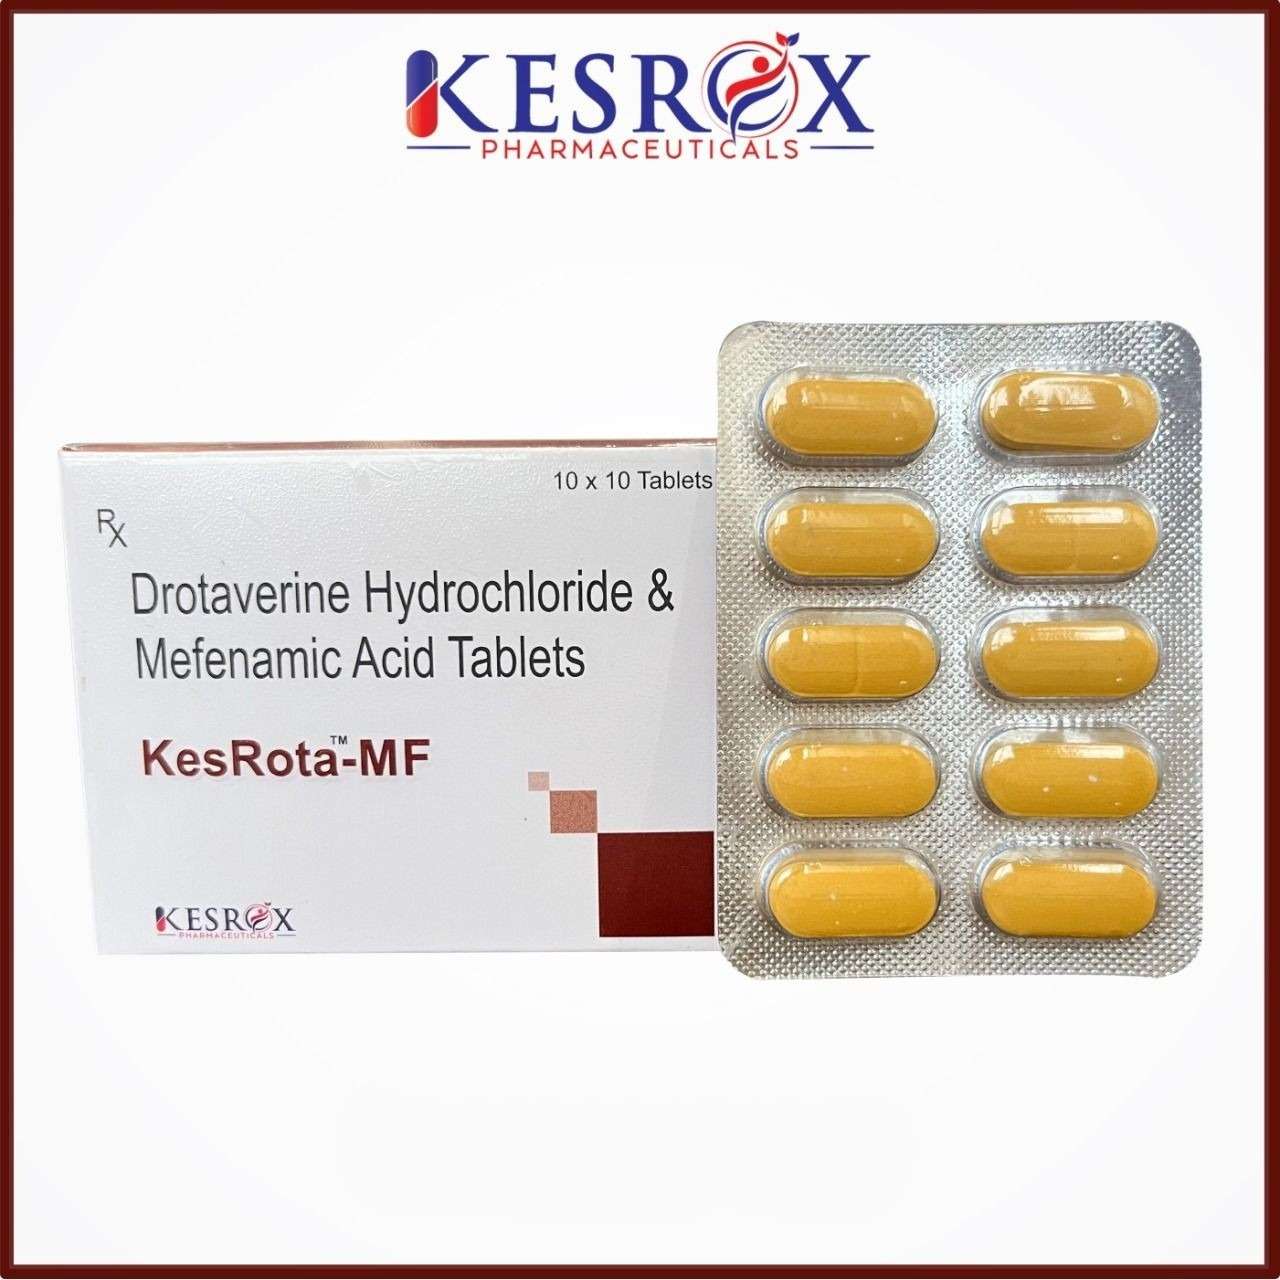 drotaverine hydrochloride ip 80mg & mefanimic acid 250mg tablet